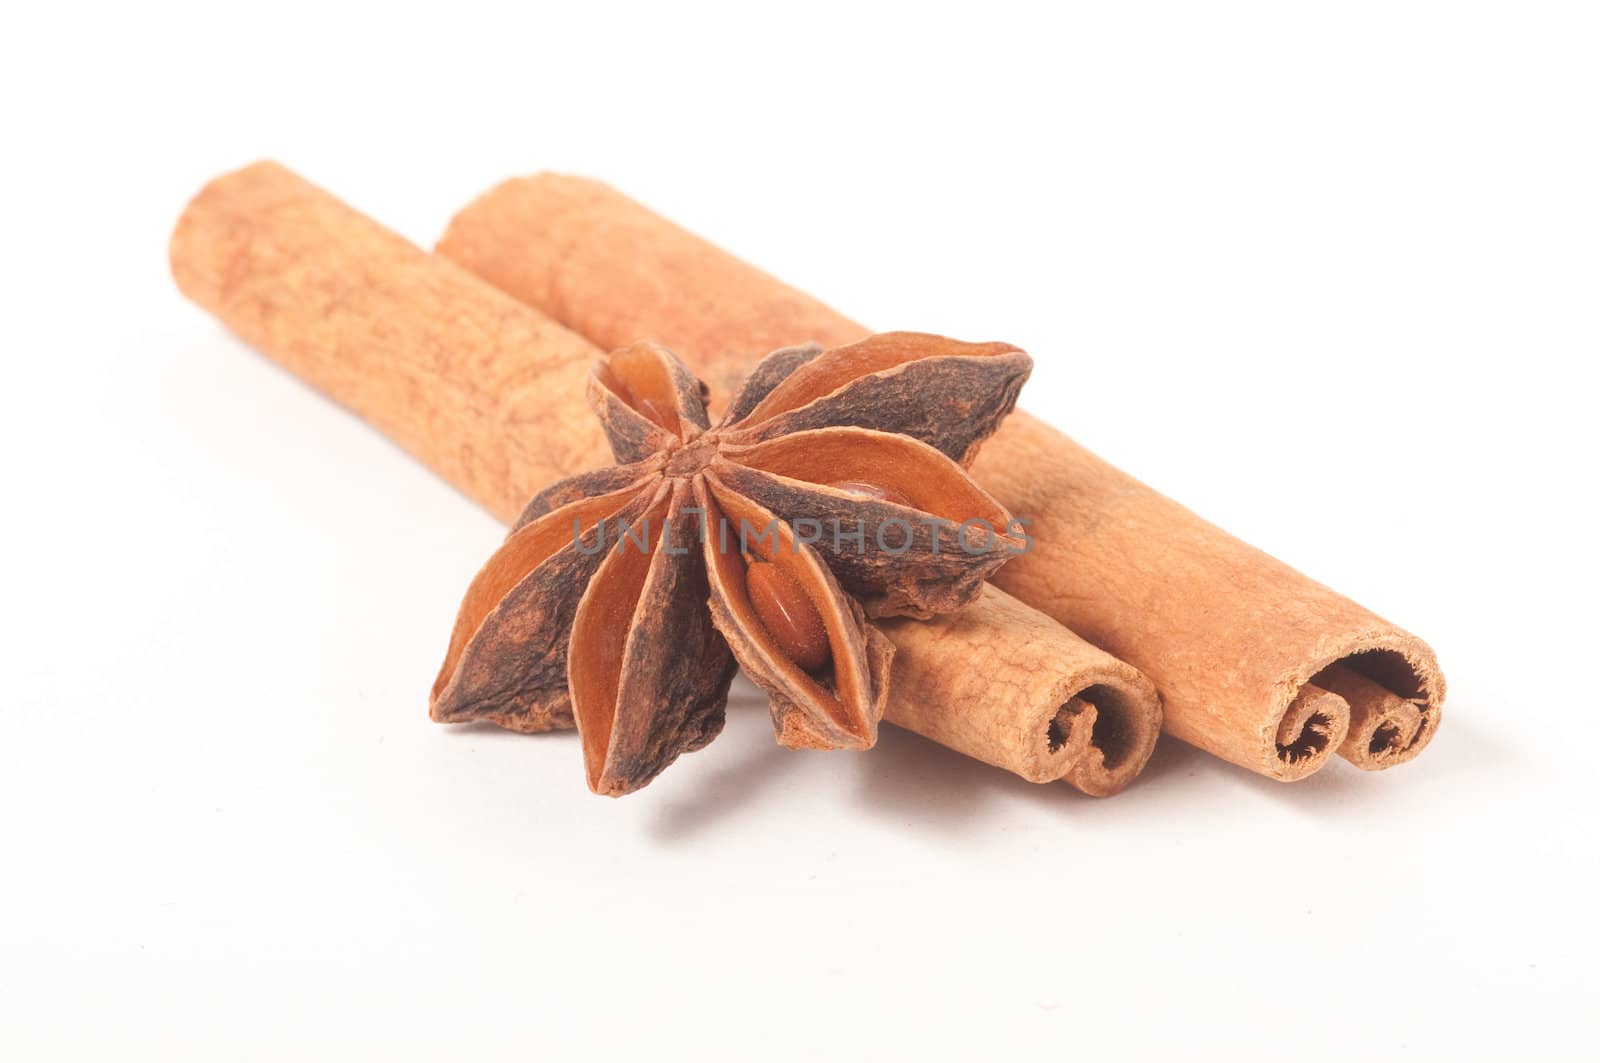 Cinnamon sticks and anise by Rainman